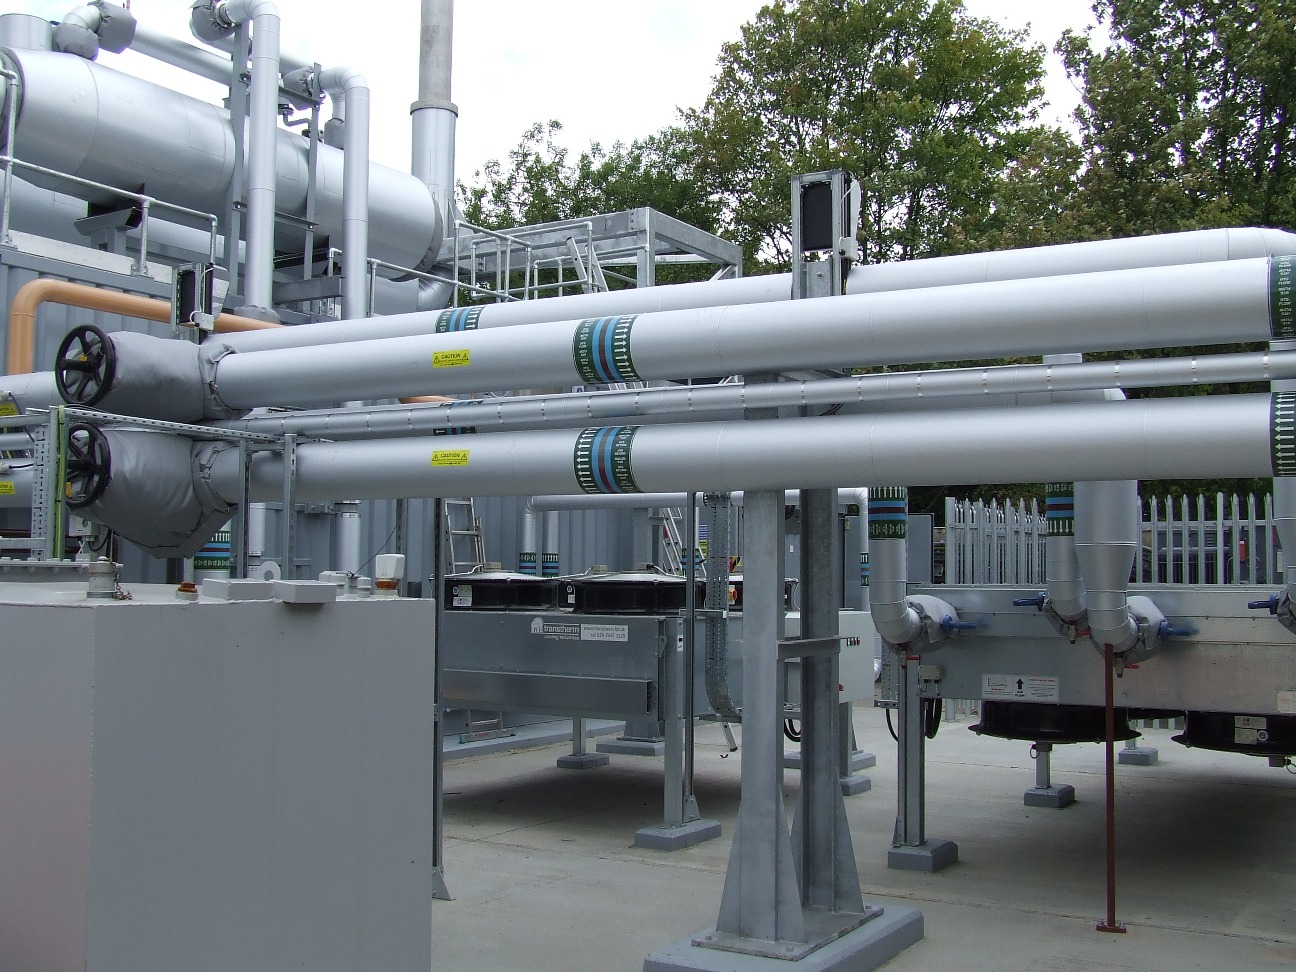 ENER-G CHP system at Loughborough University